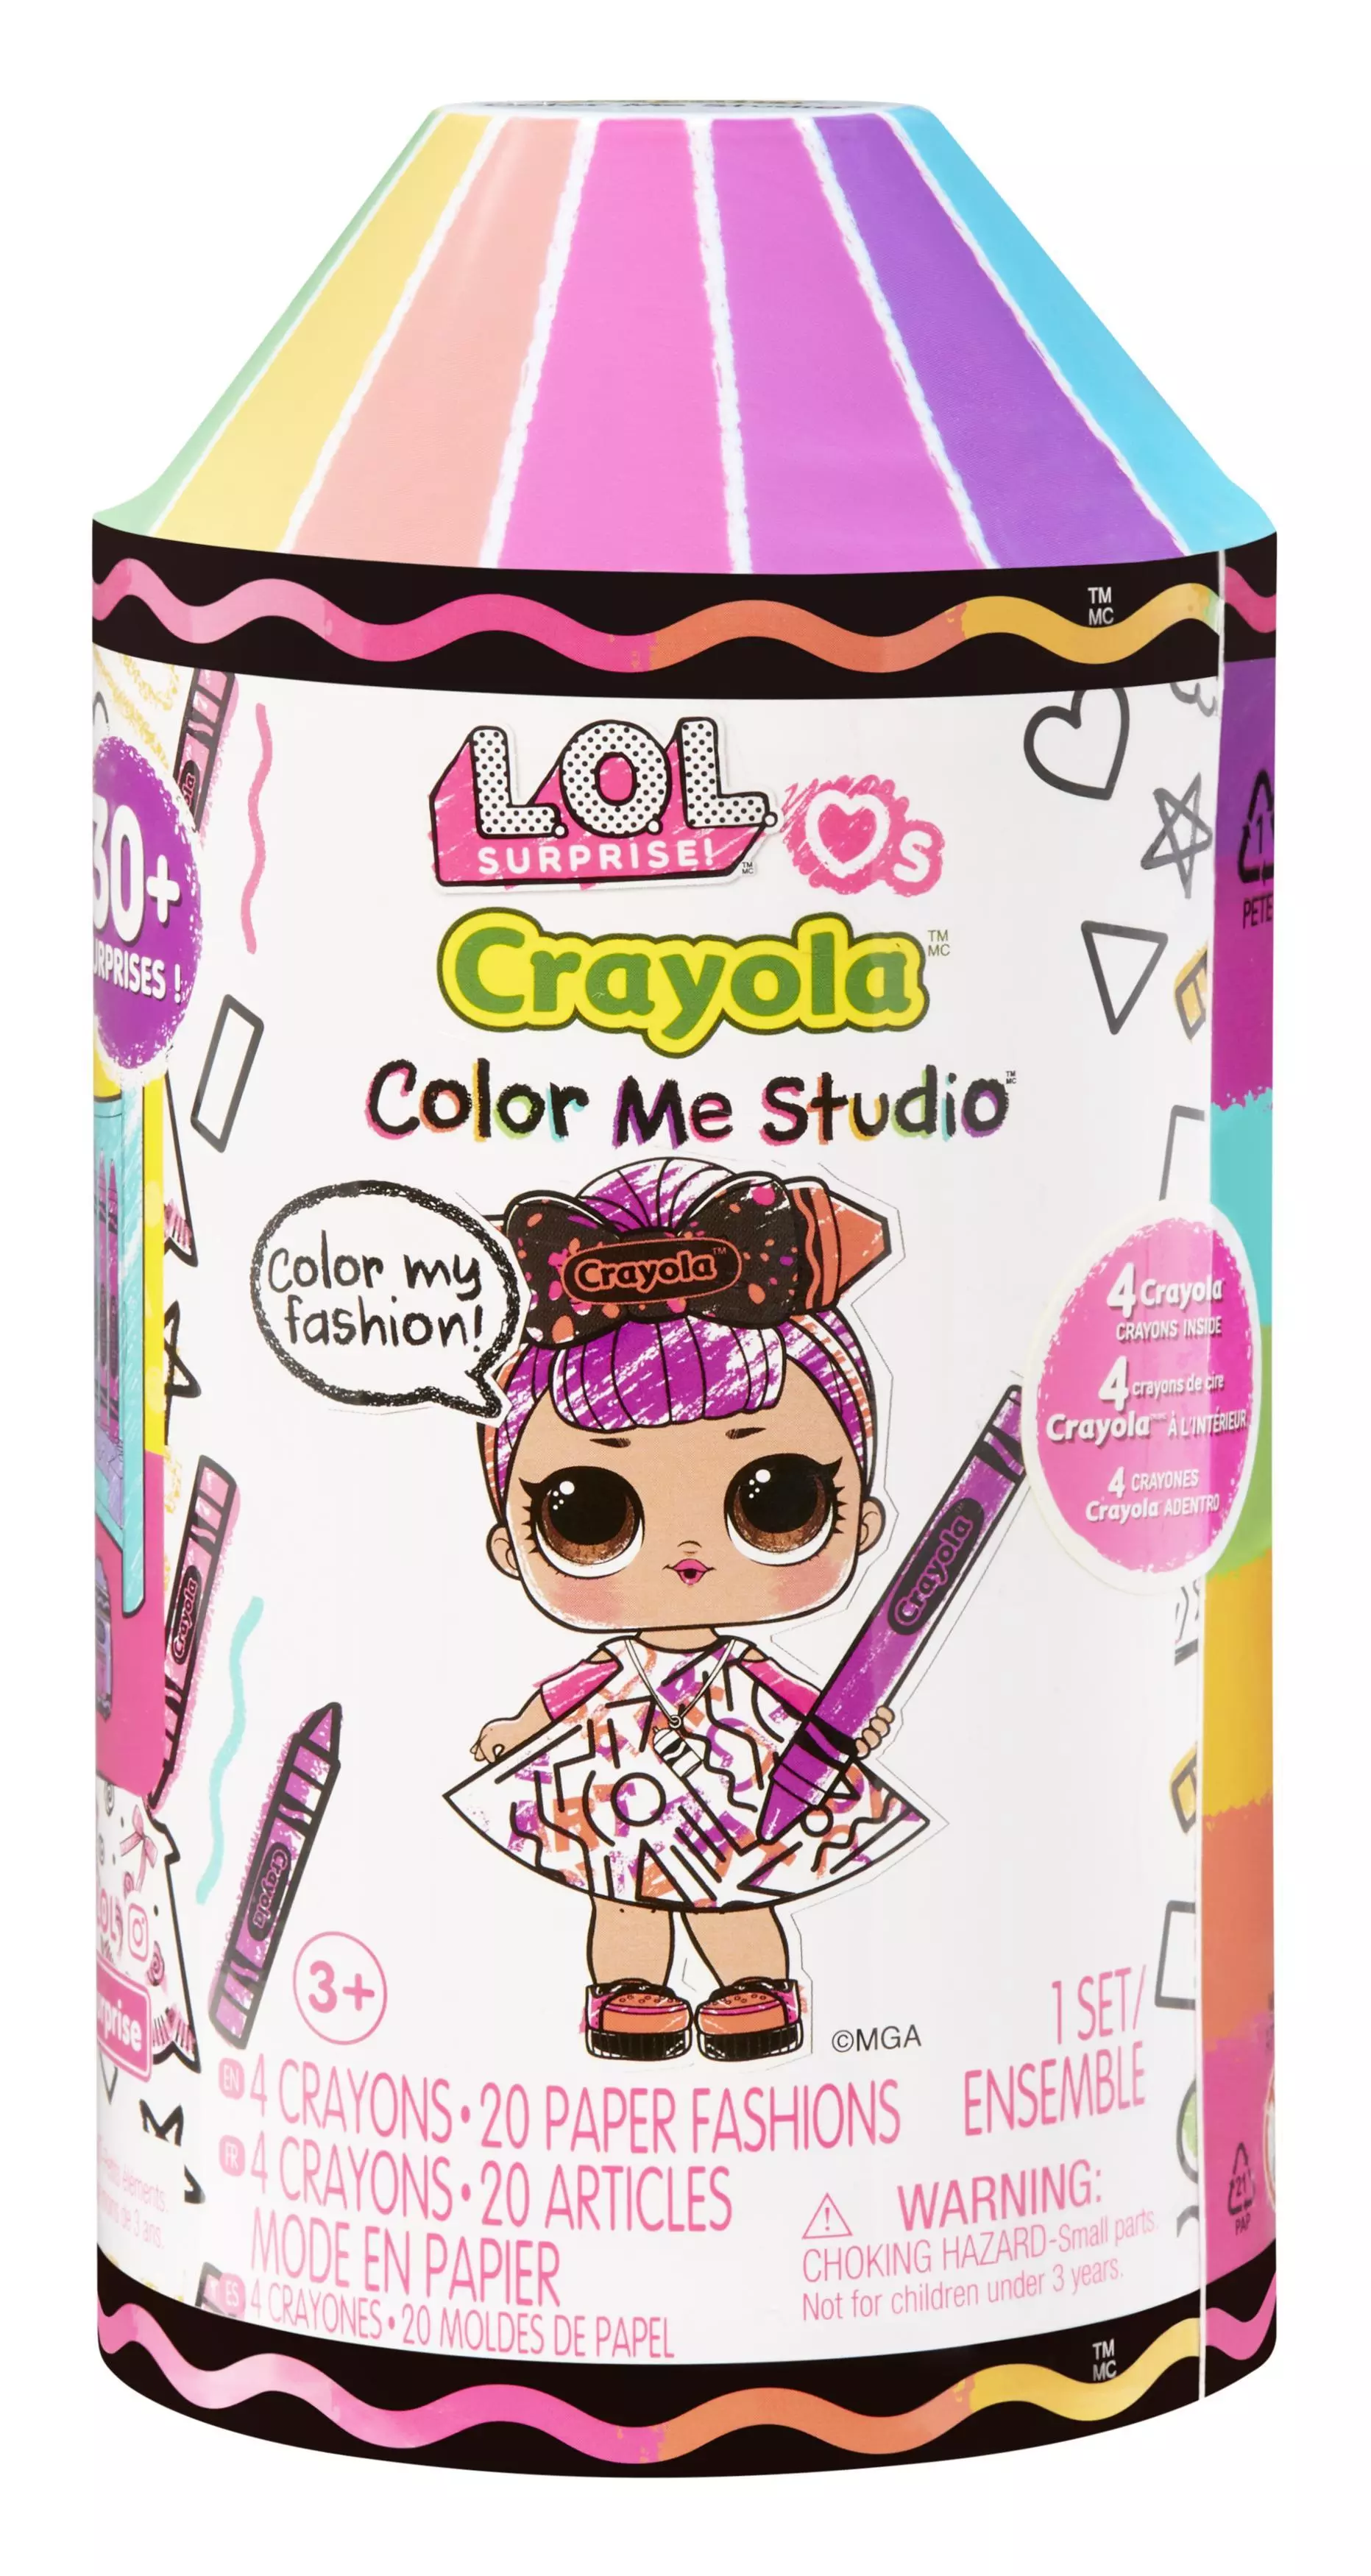 L.O.L. Surprise! Loves Crayola Color Me